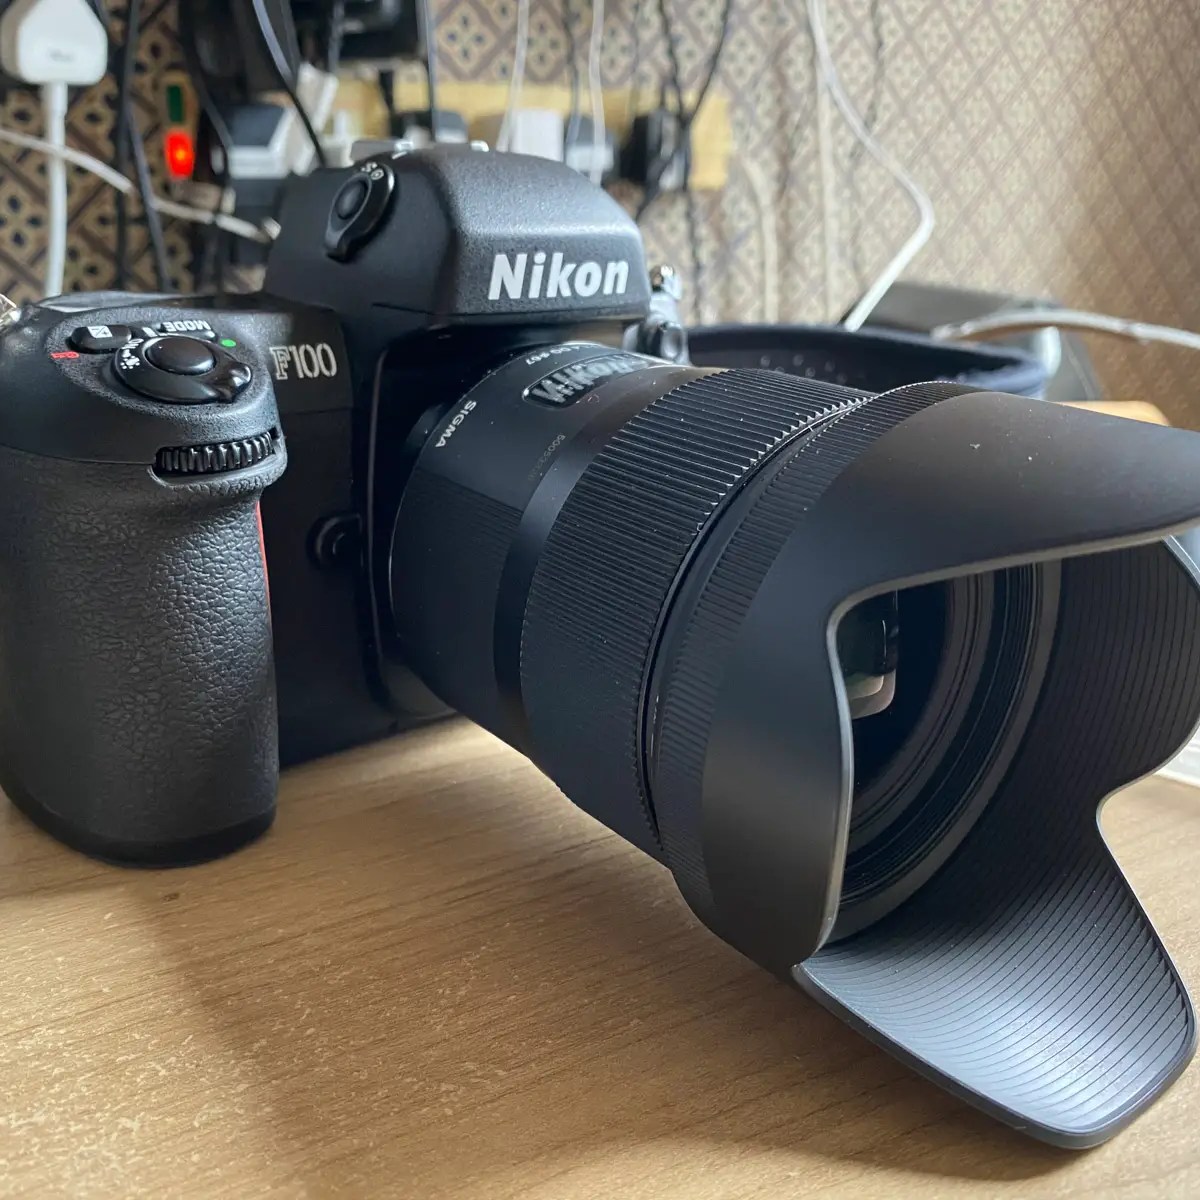 My Nikon F100 and Sigma 35 ART lens